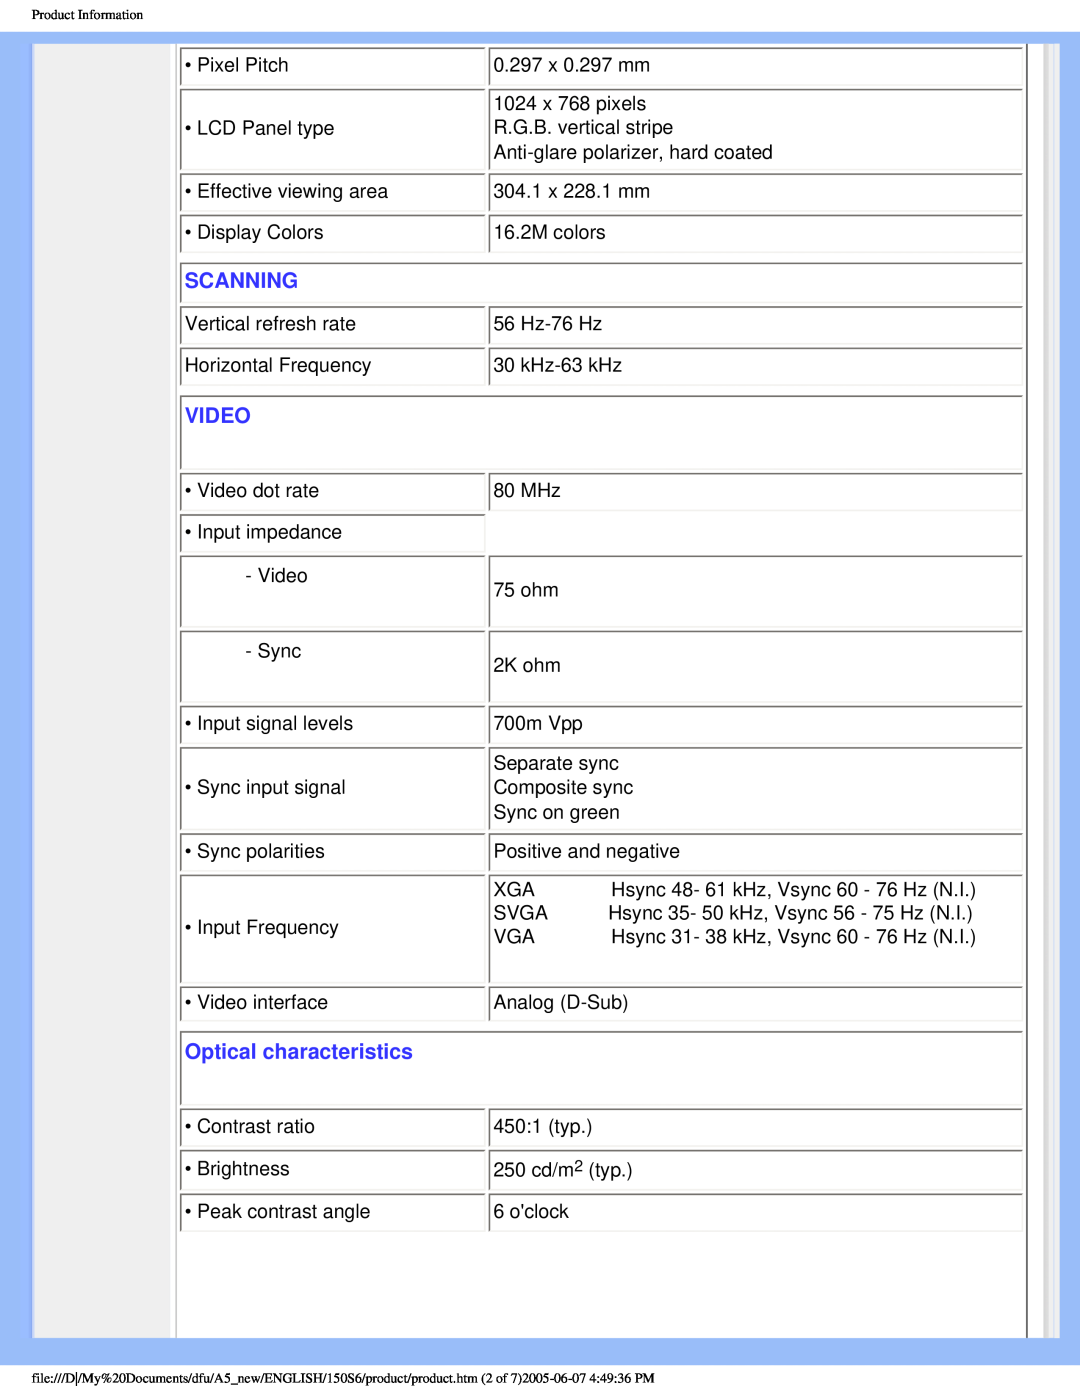 Philips 15056 user manual Scanning, Video, Optical characteristics 